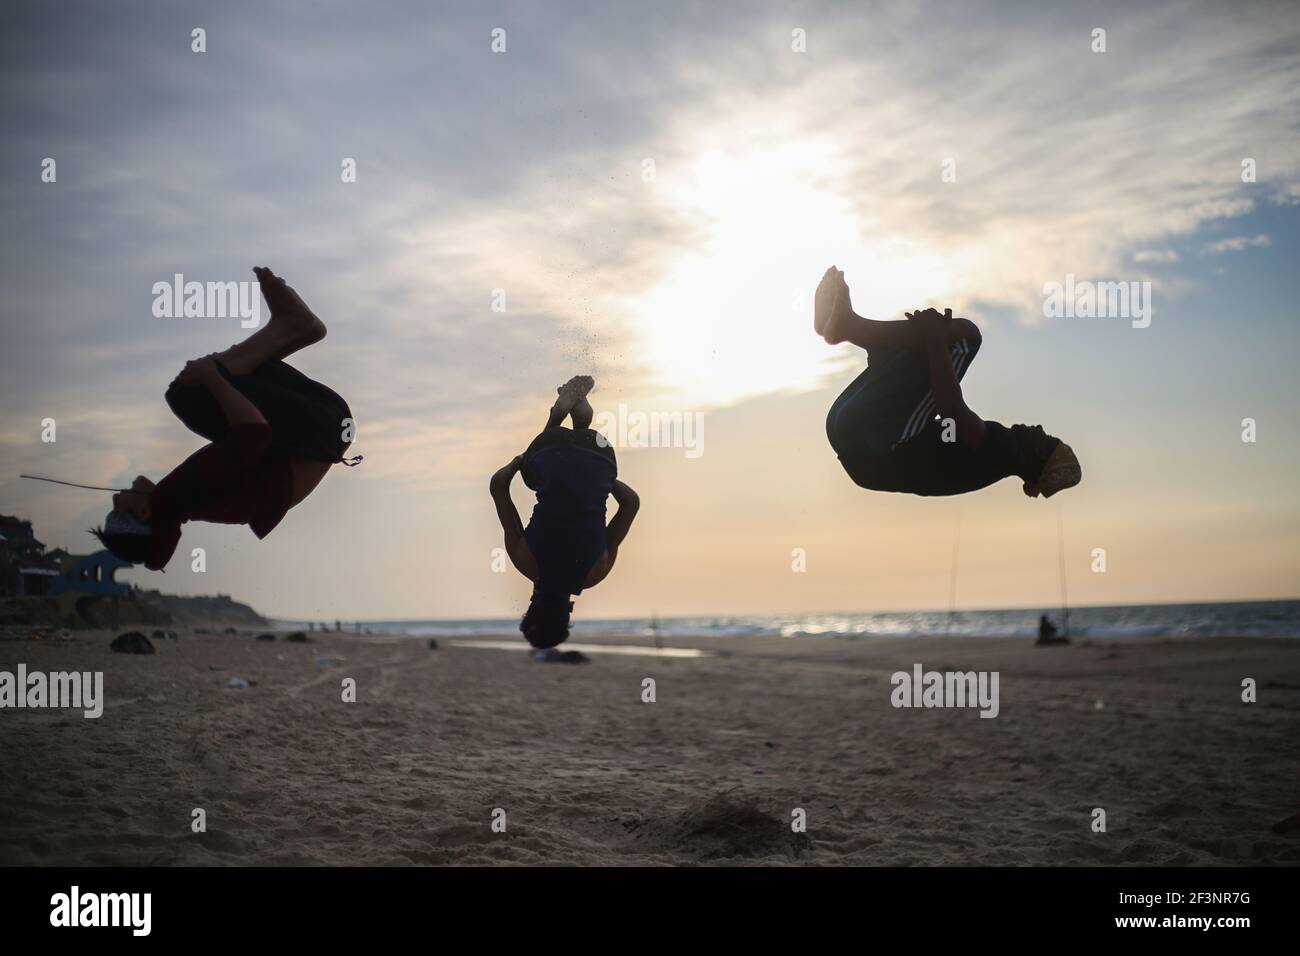 Palestinian Youth Practice Parkour in Gaza Stockfoto